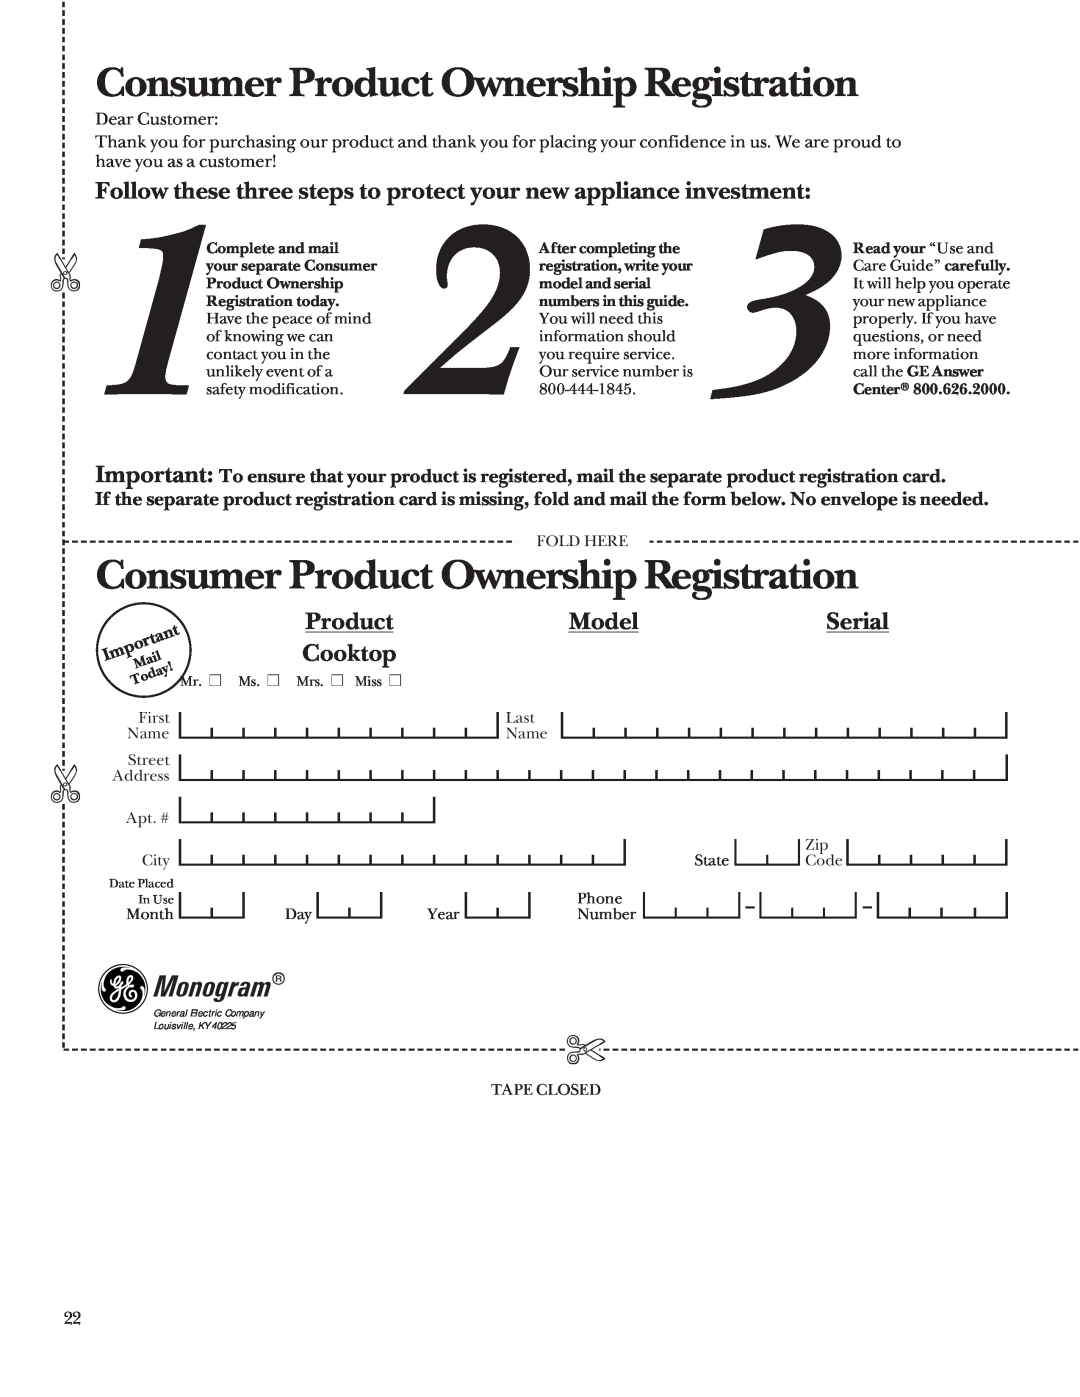 GE Monogram Halogen/Radiant Cooktop manual Consumer Product Ownership Registration, Model, Serial, Monogram 